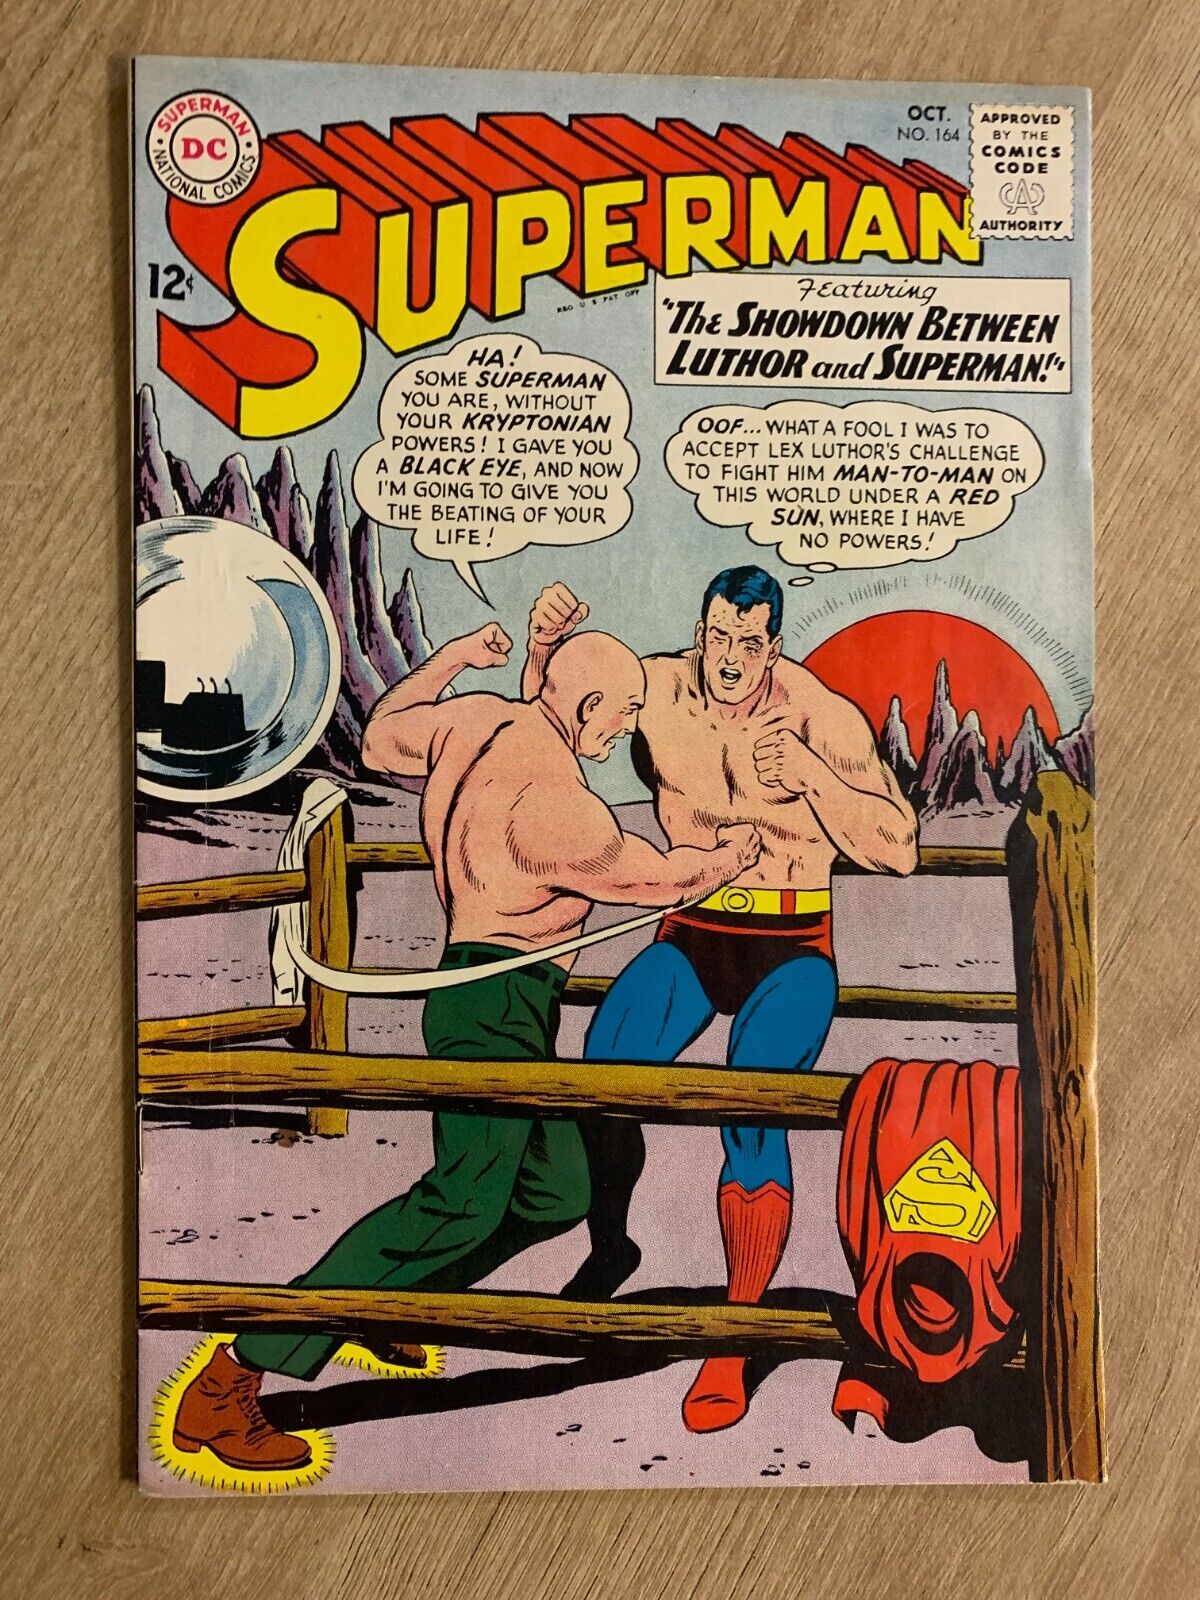 Superman #164 - Oct 1963 - Vol.1 - DC - Silver Age - 6.0 FN